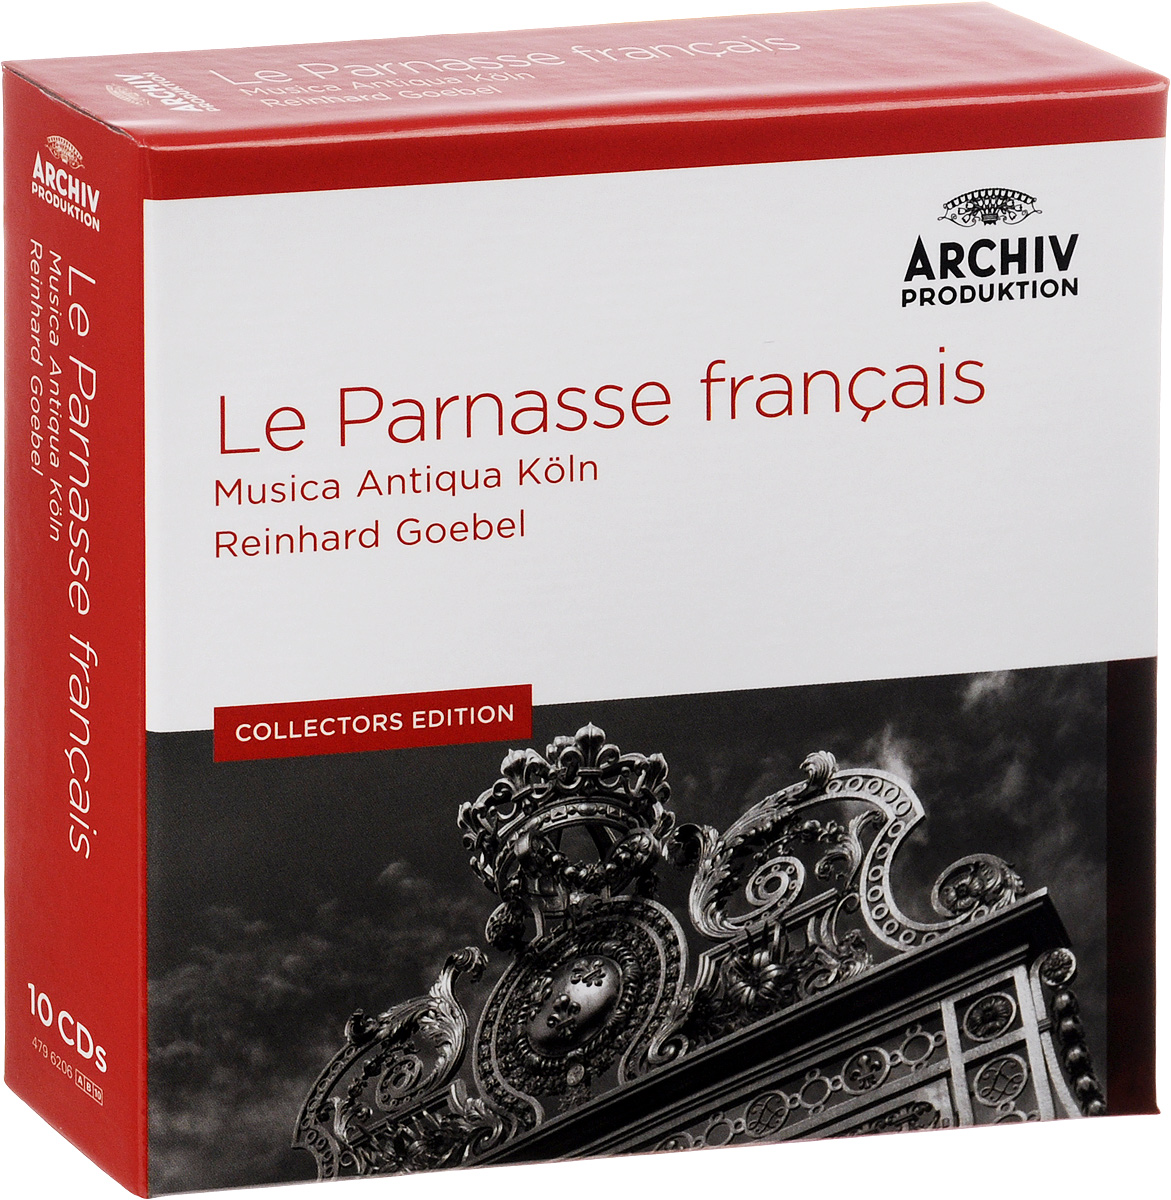 Reinhard Goebel, Musica Antiqua Koln. Le Parnasse Francais. Collectors Edition (10 CD)